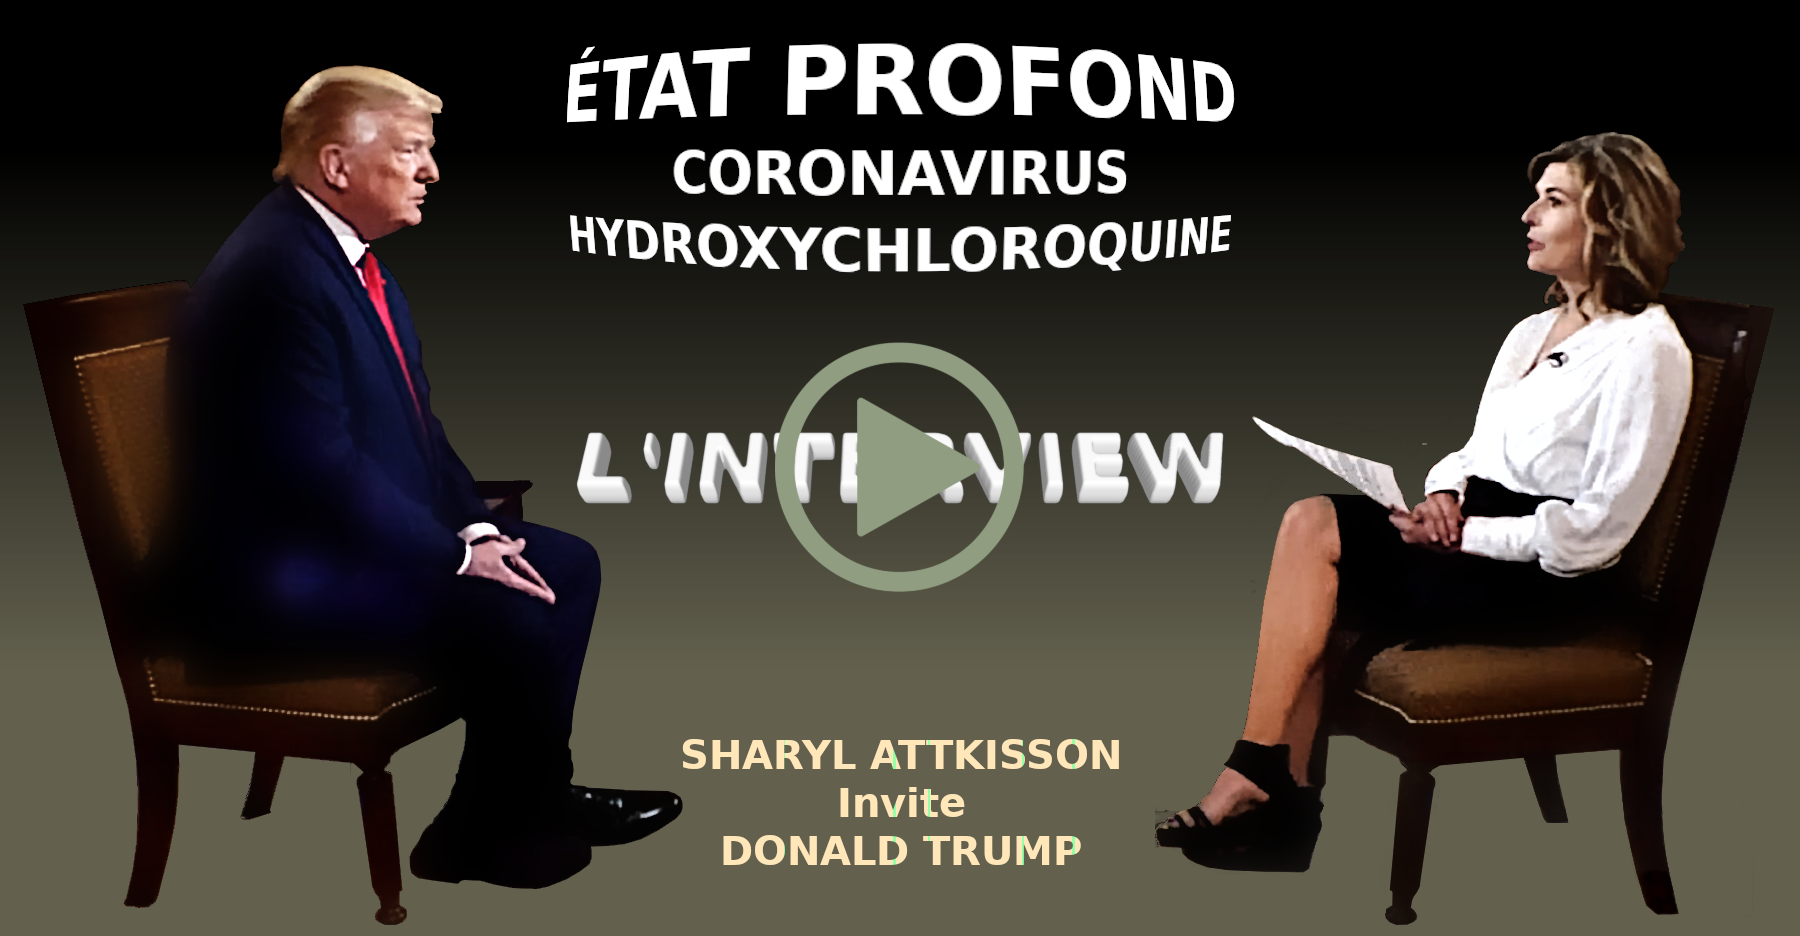 Donald Trump Sharyl Attkisson